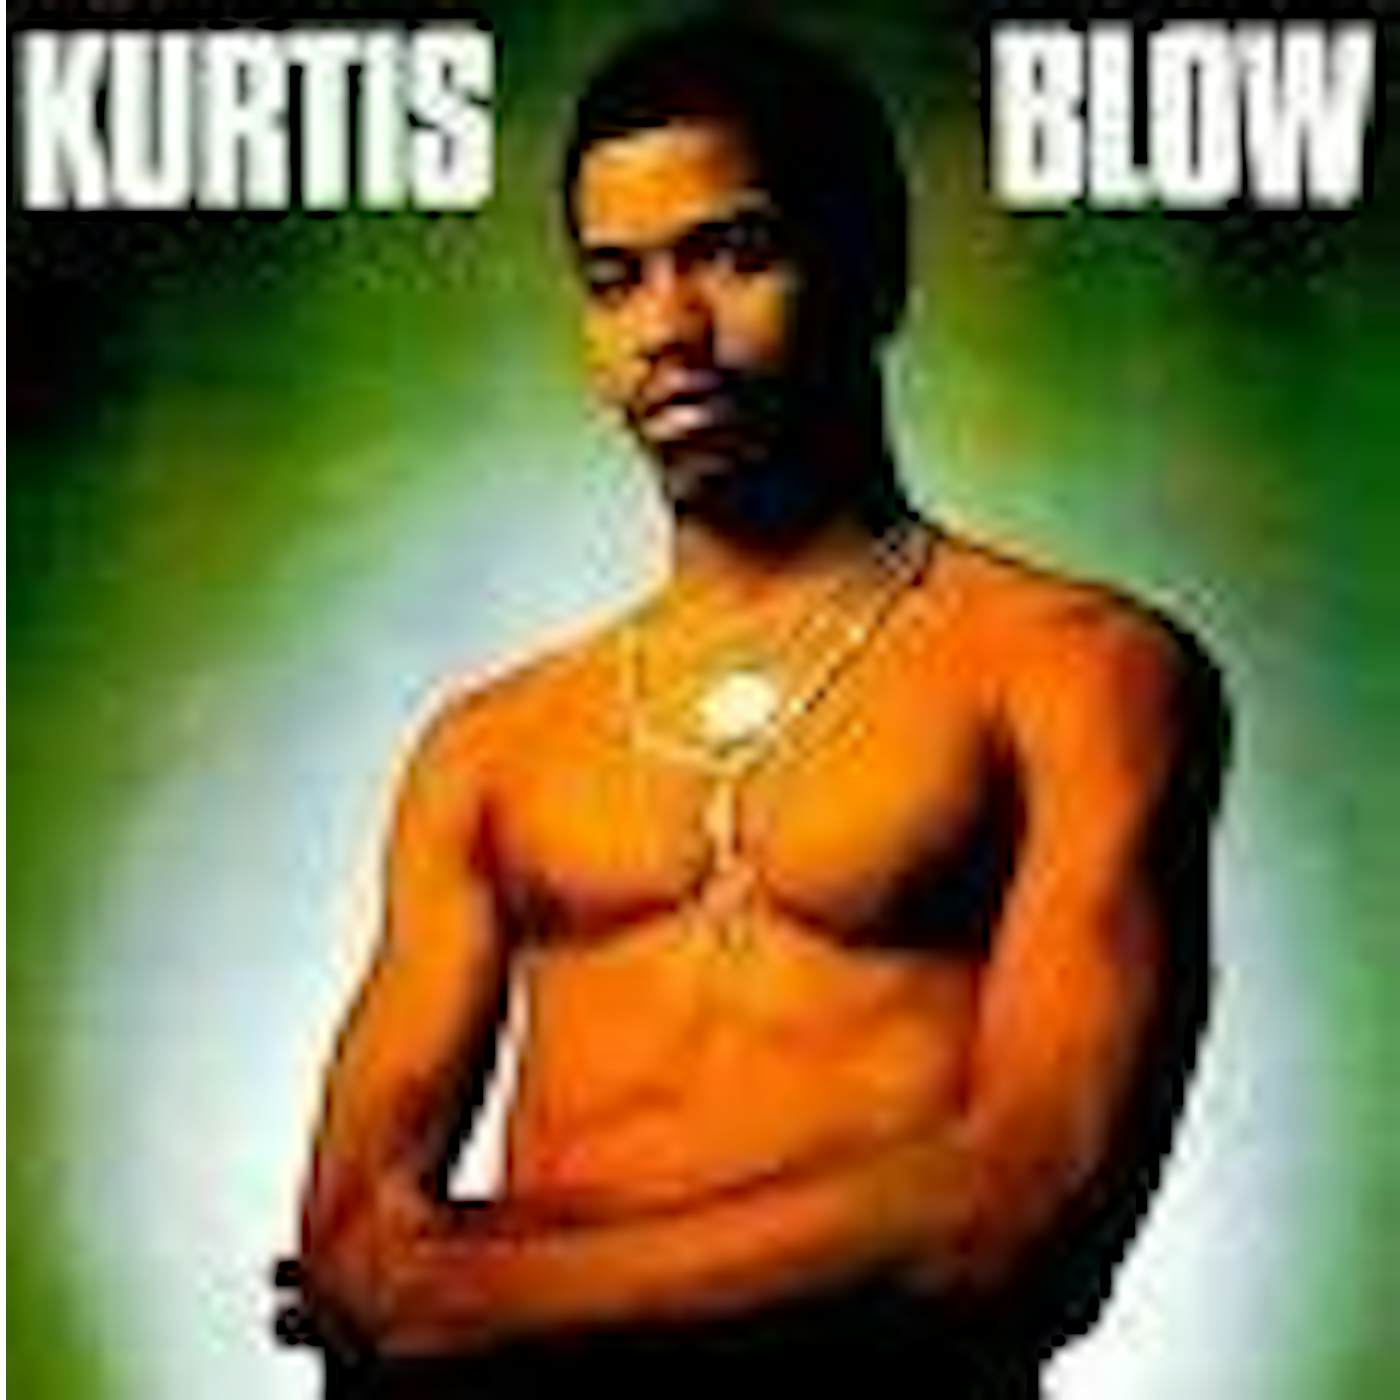 Kurtis Blow Vinyl Record